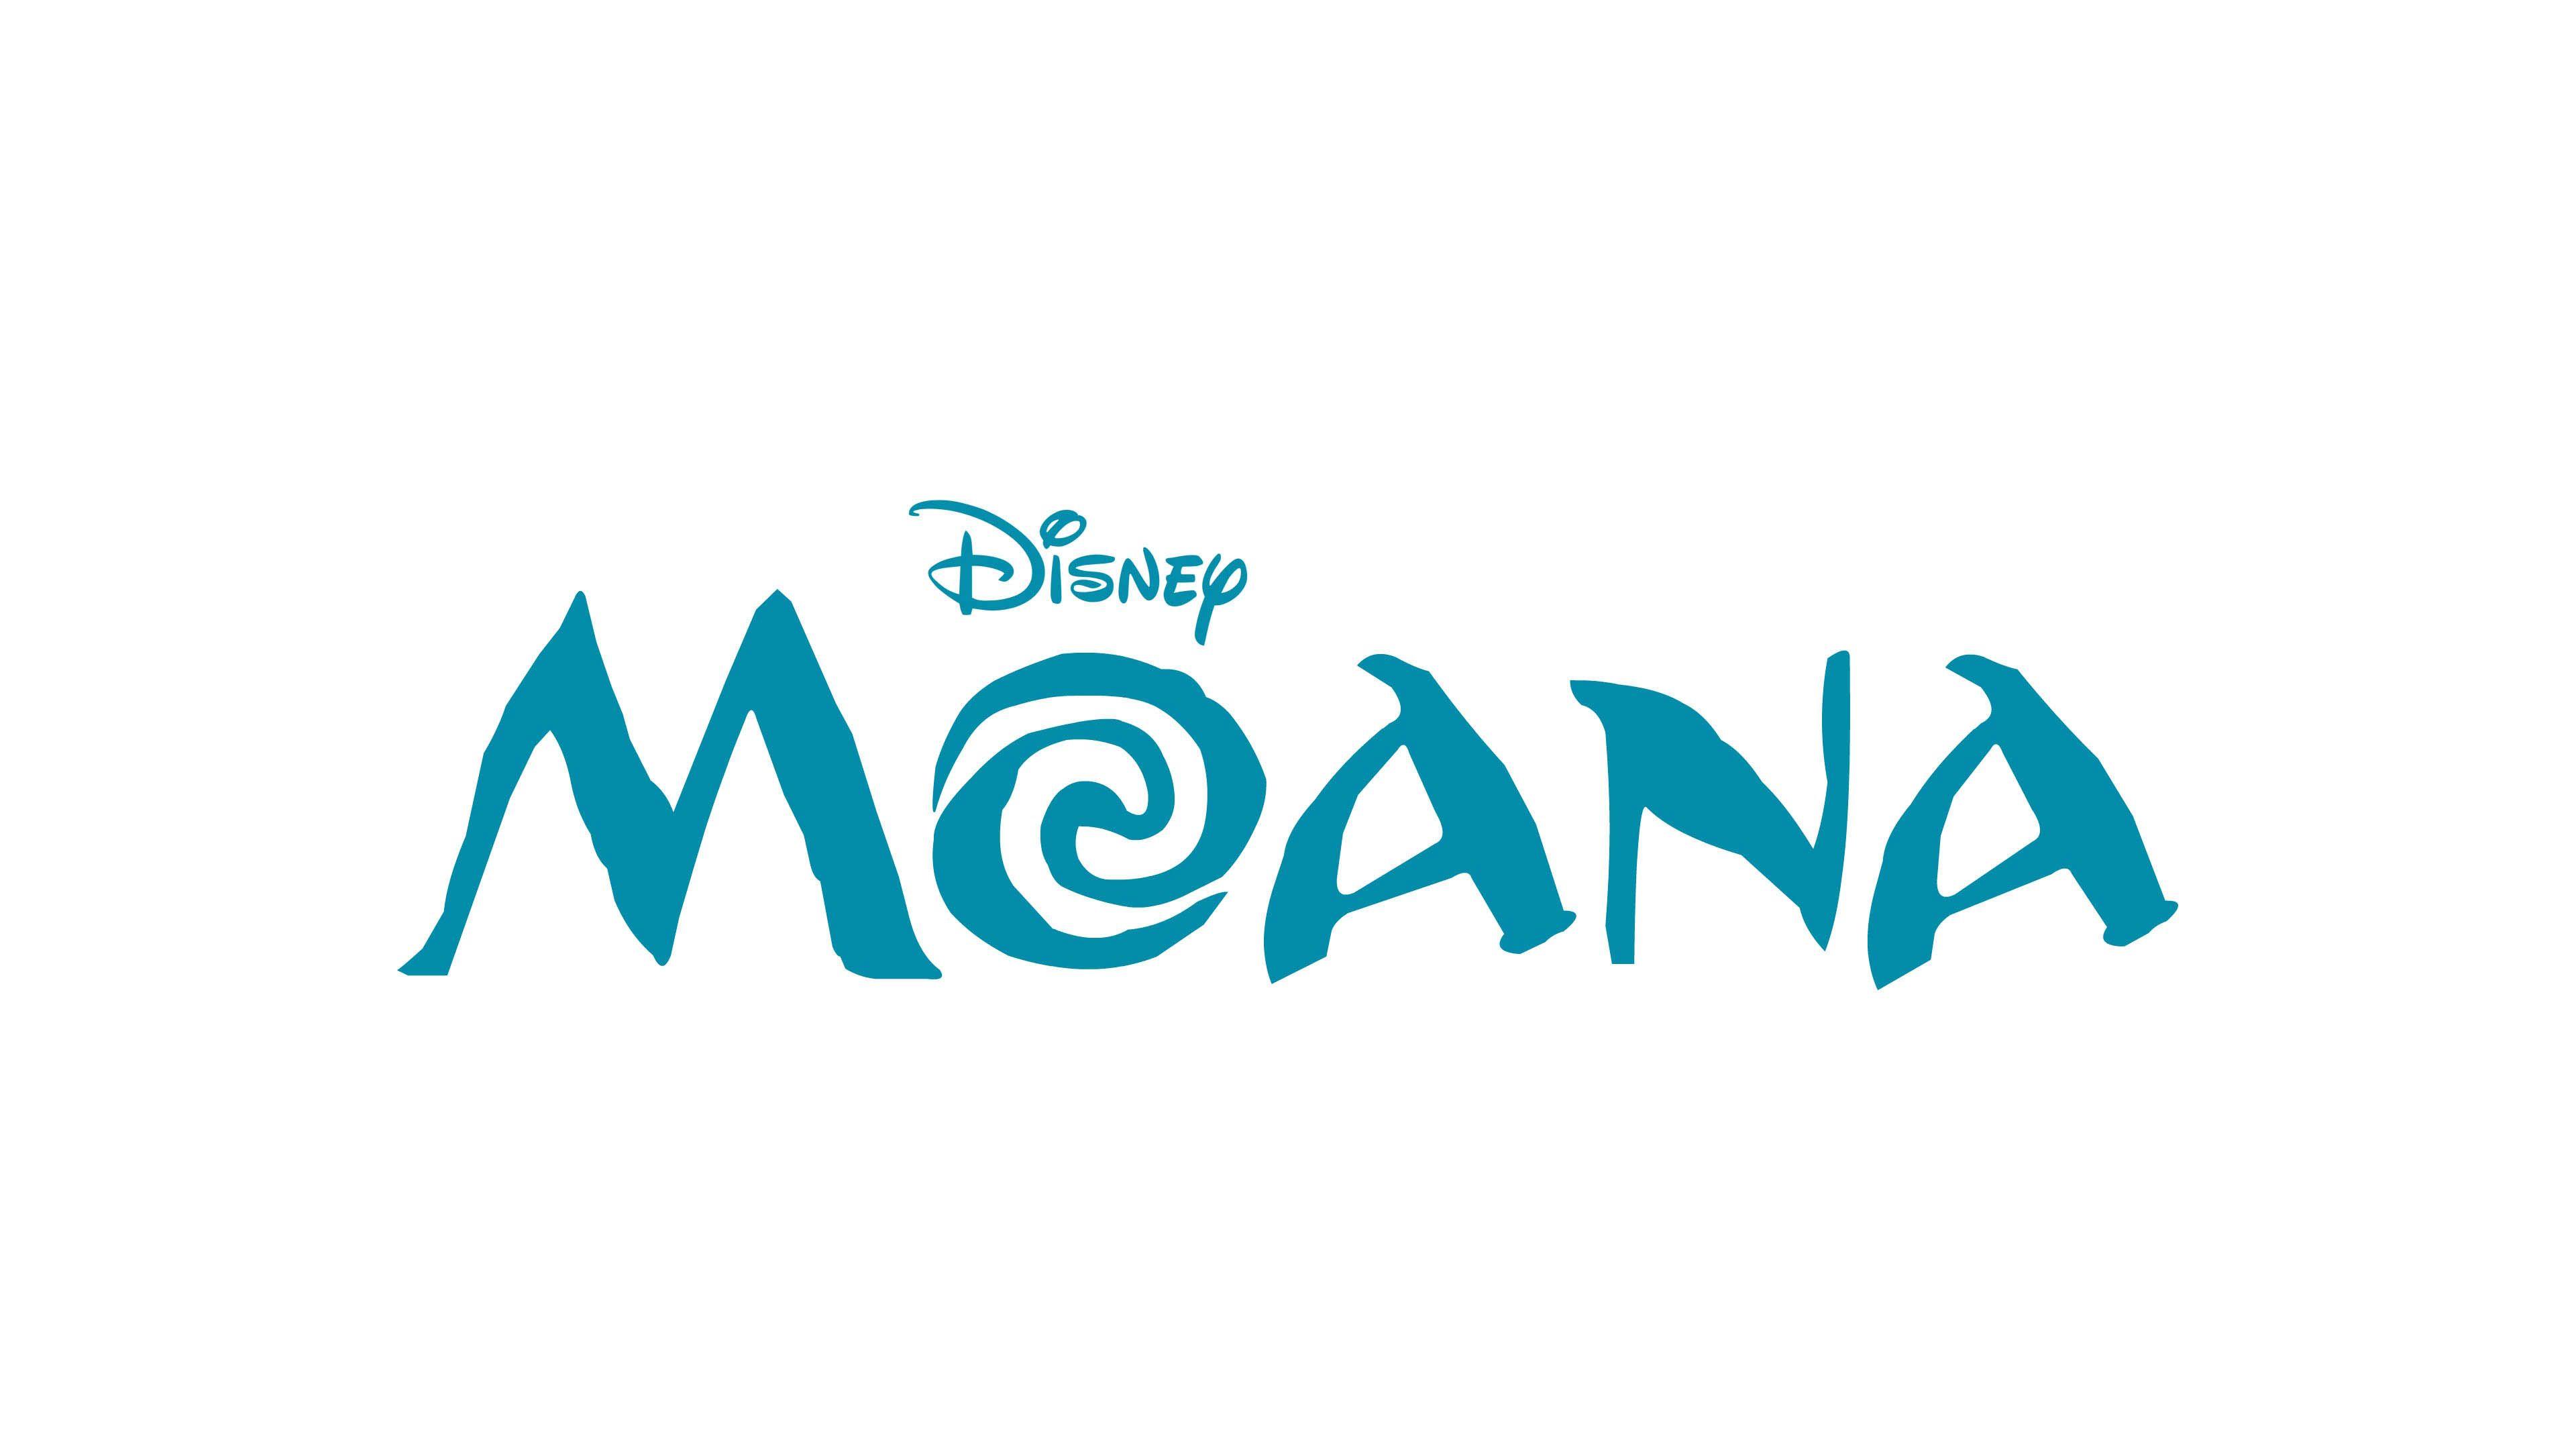 Disney Moana 4k Logo 16 9 Ultra HD, UHD